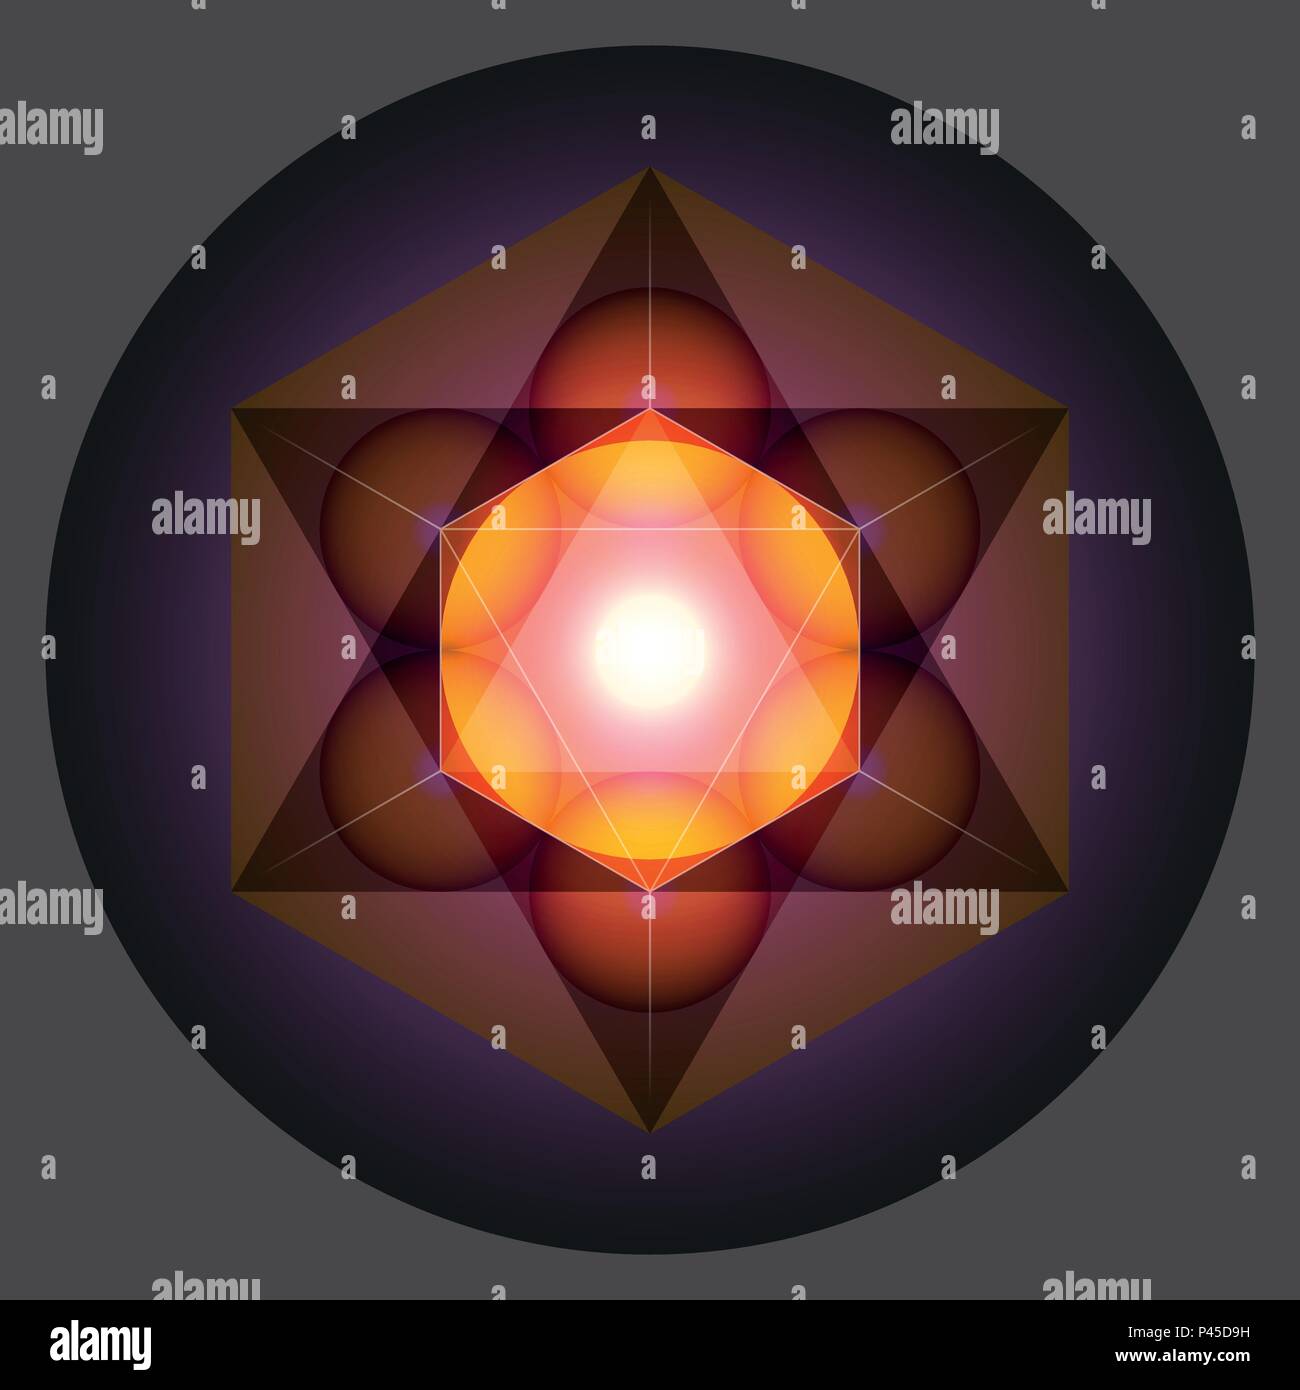 Mandala based on Metatron's cube - sacred geometry figure. Vector illustration. Stock Vector